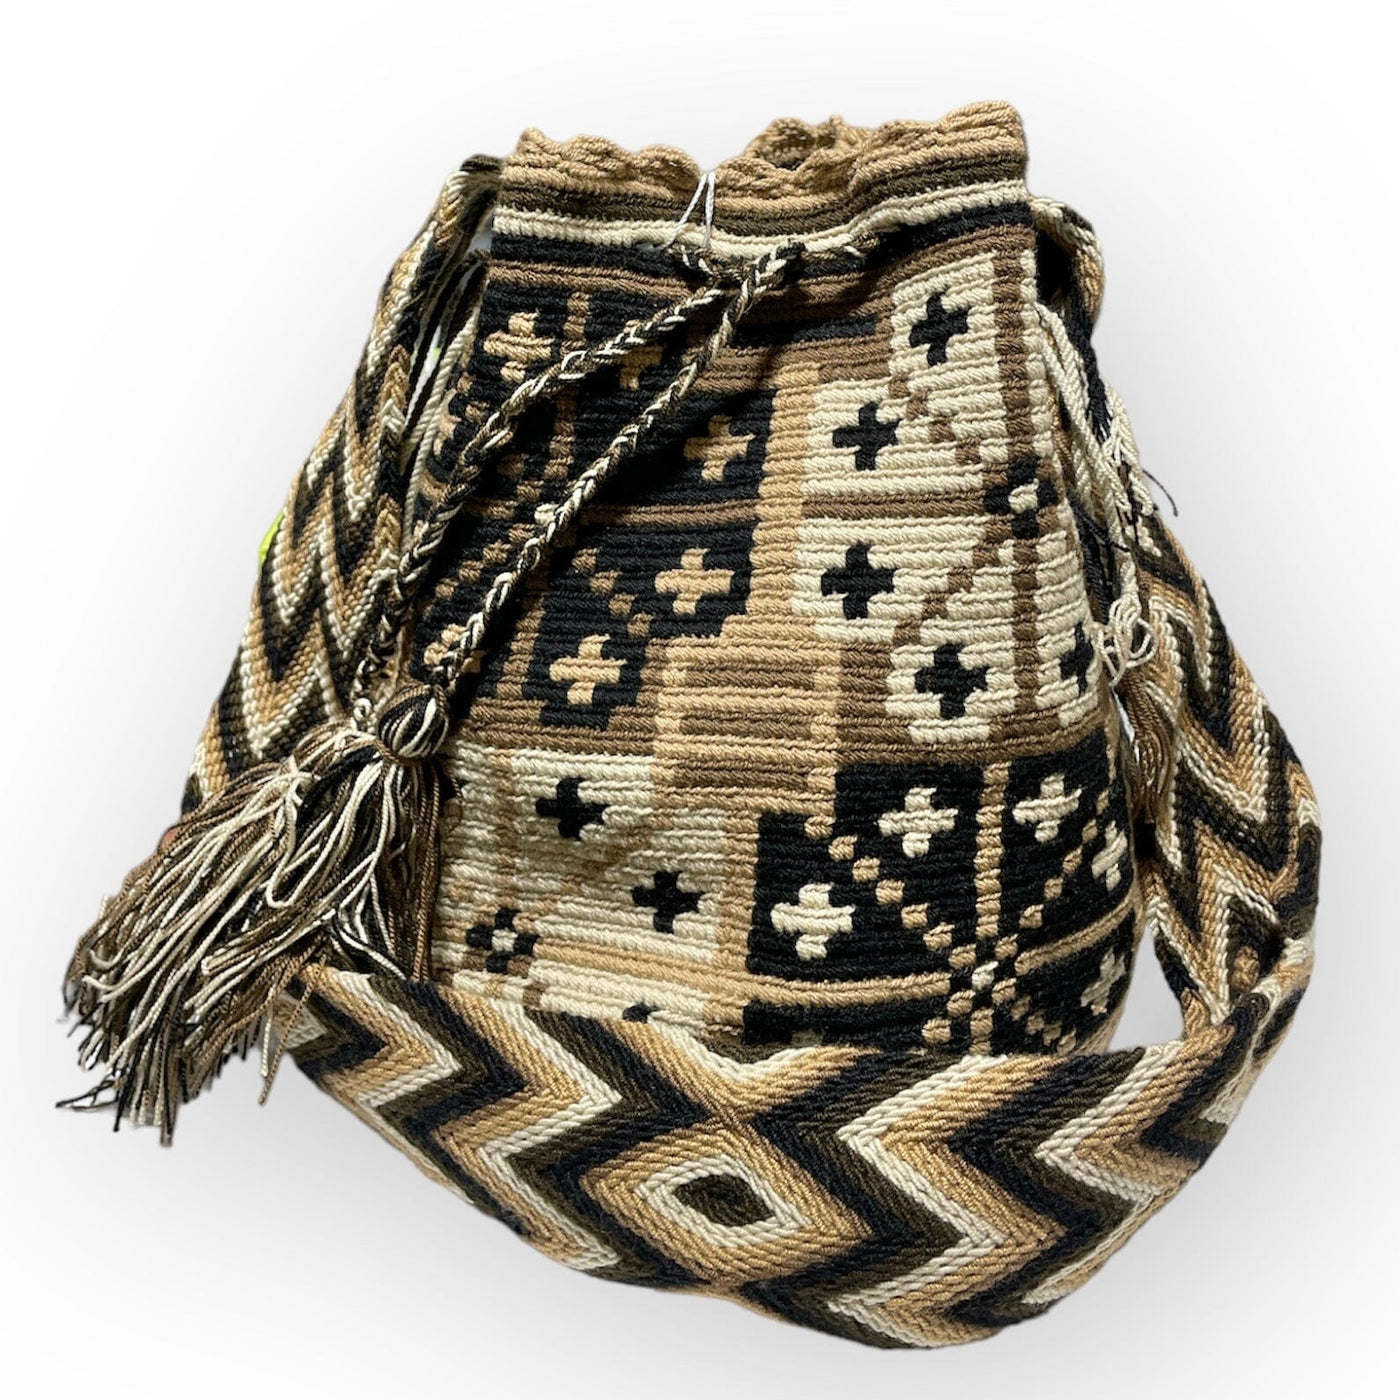 Earth Tones Crochet Bags | Fall Colors | Large Special Edition Crochet Boho Bag - Crossbody/Shoulder Bucket Bag BR16 Winter Flowers 